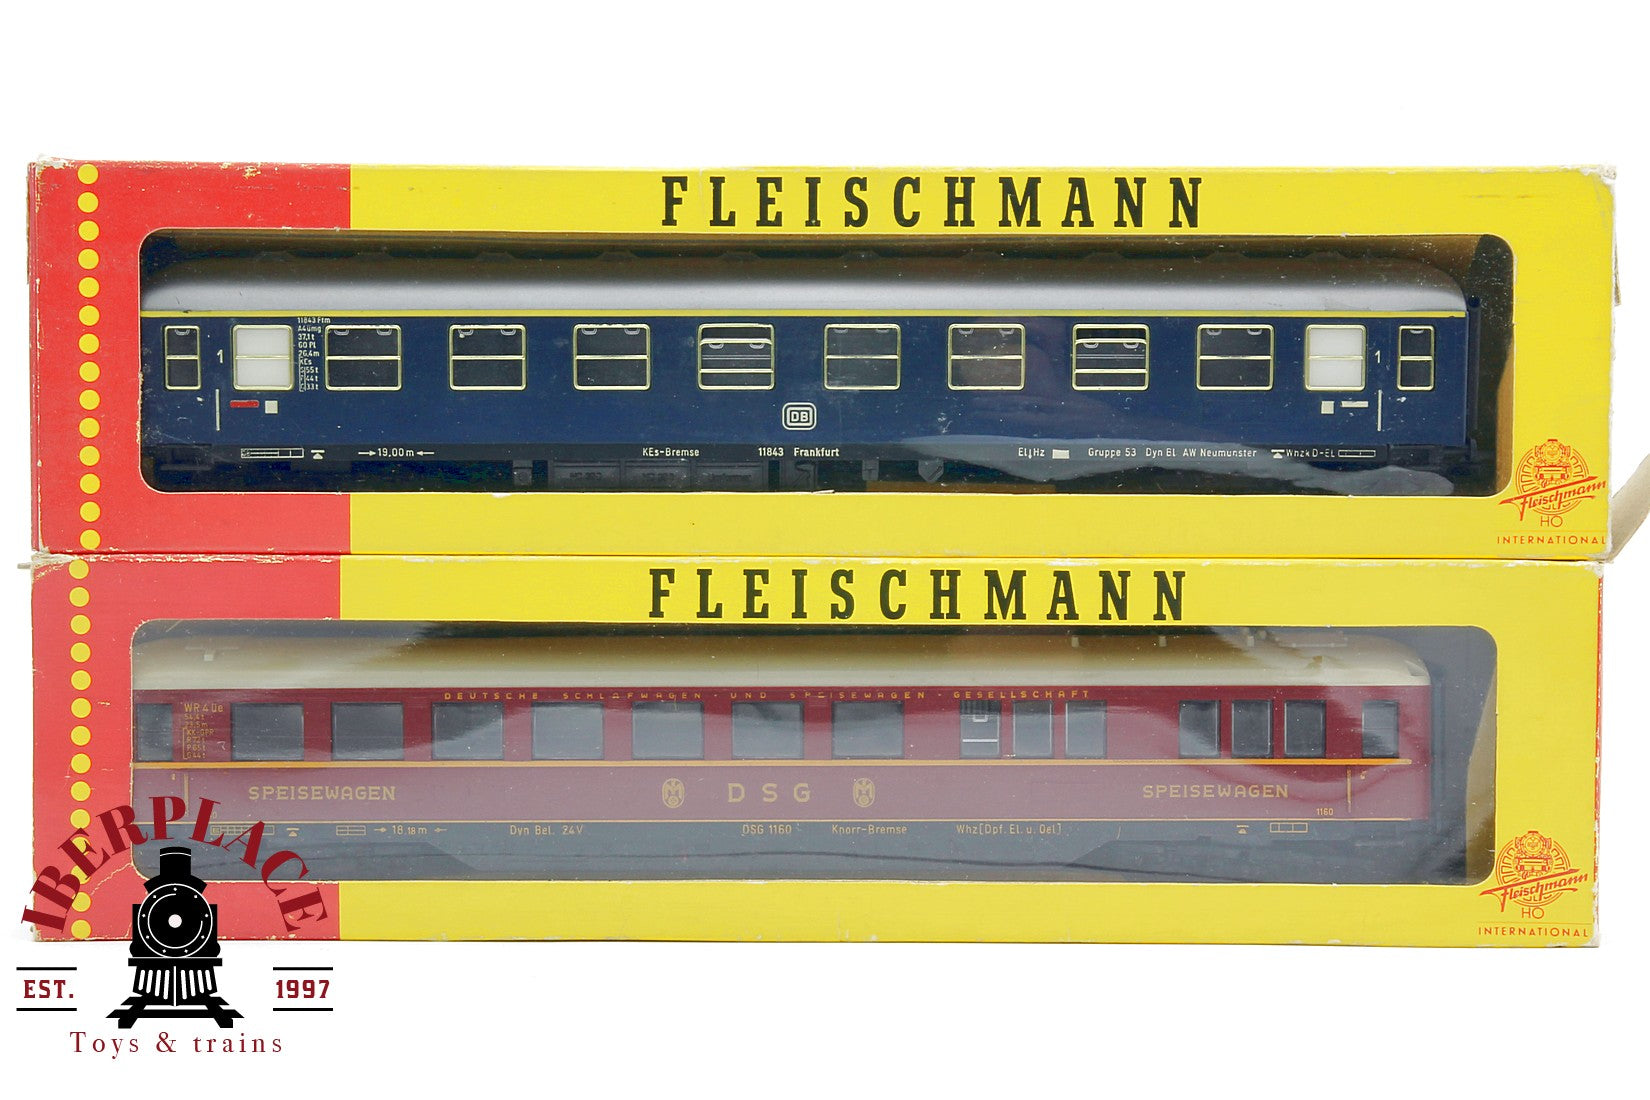 1:87 DC Fleischmann 5112 5110 2x Personenwagen DSG DB 41 vagones pasajeros restaurante H0 escala ho 00